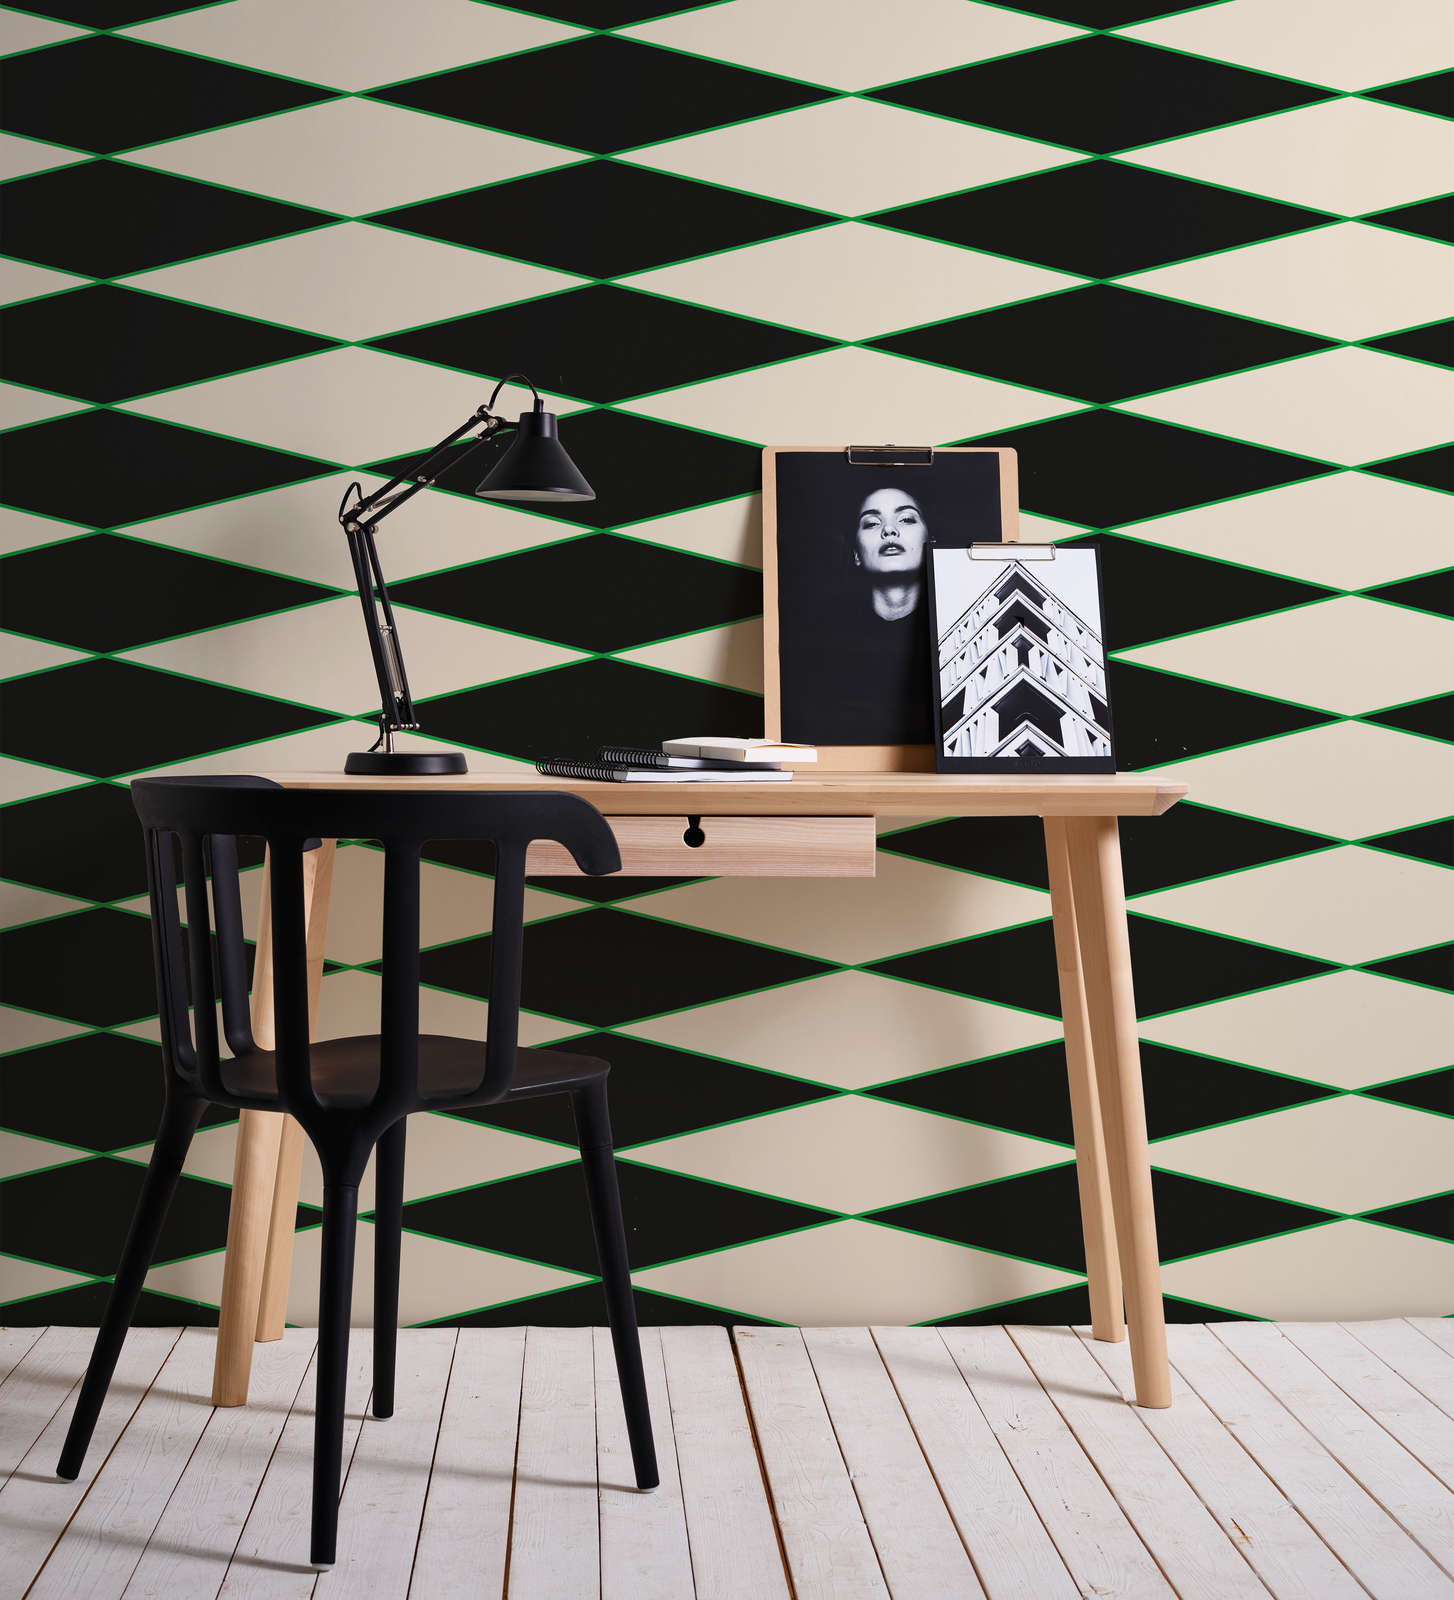             Graphic Wallpaper with Diamonds & Line Patterns - Black, Cream, Green | Textured Non-woven
        